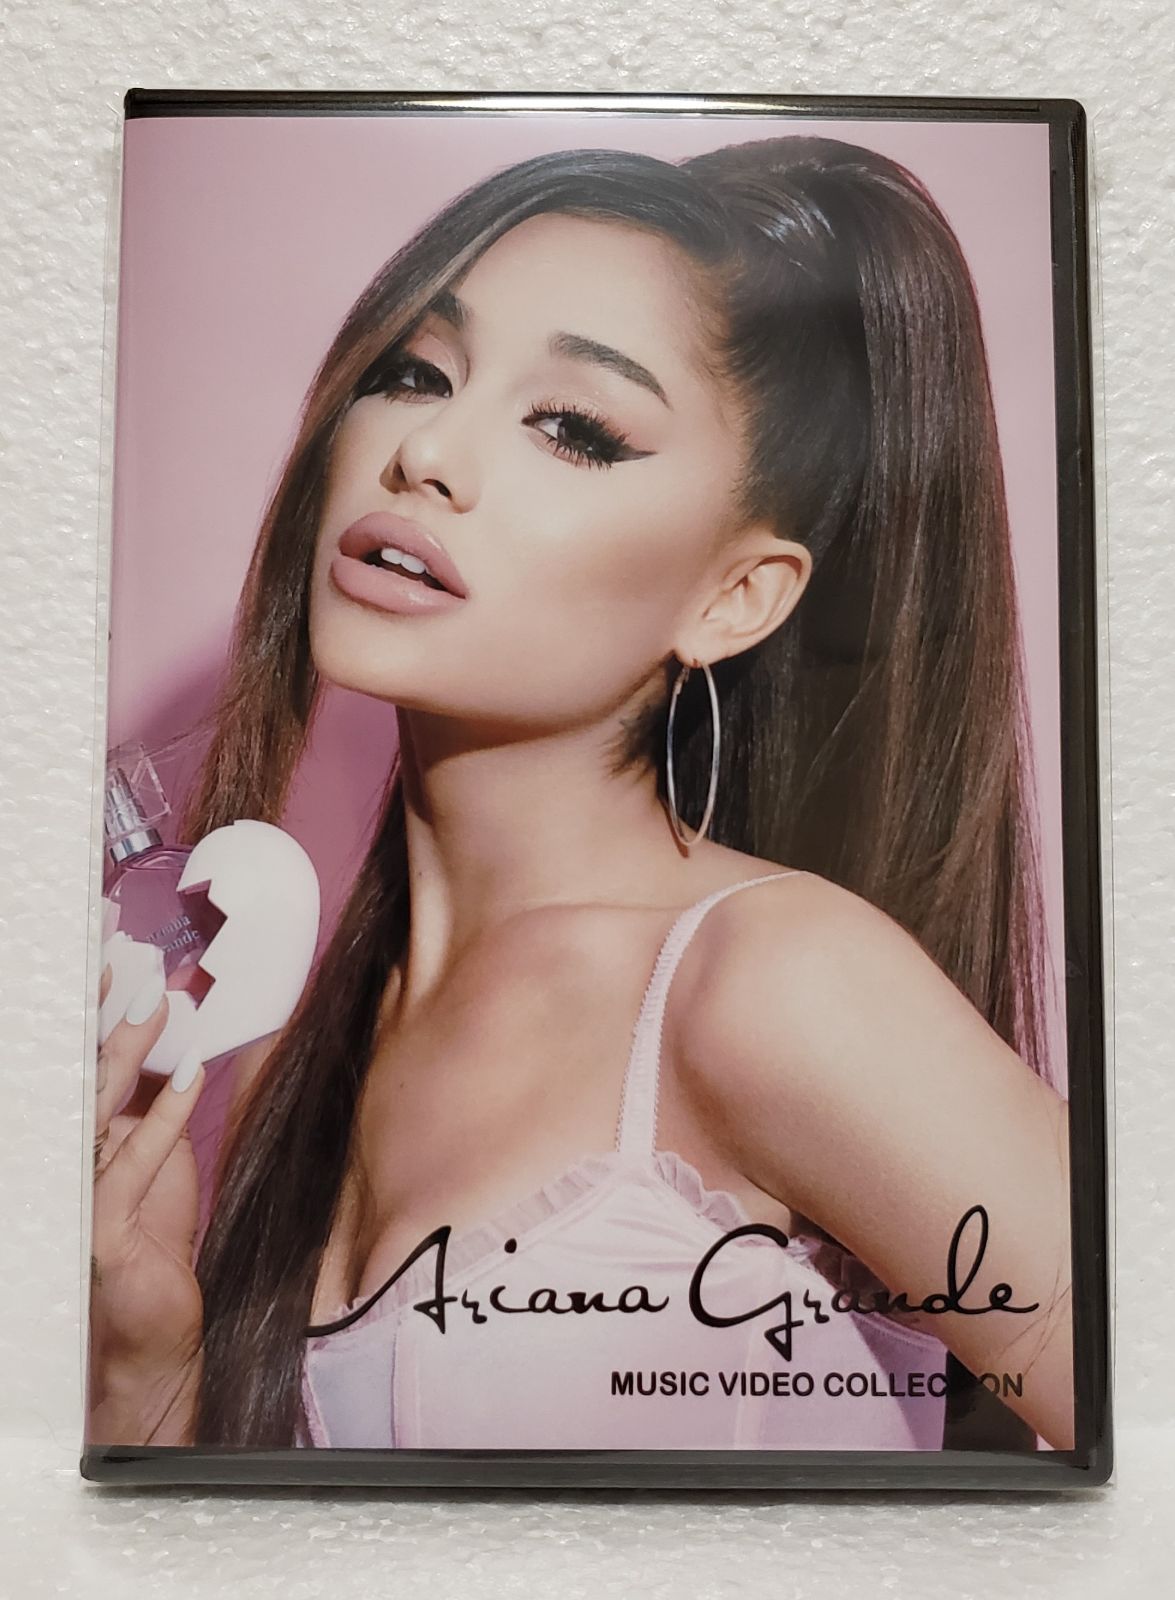 Ariana Grande アリアナグランデ The Best Blu-ray Disc 日本独自企画盤 見本盤 サンプル盤 プロモ盤 未開封UIXU-9001